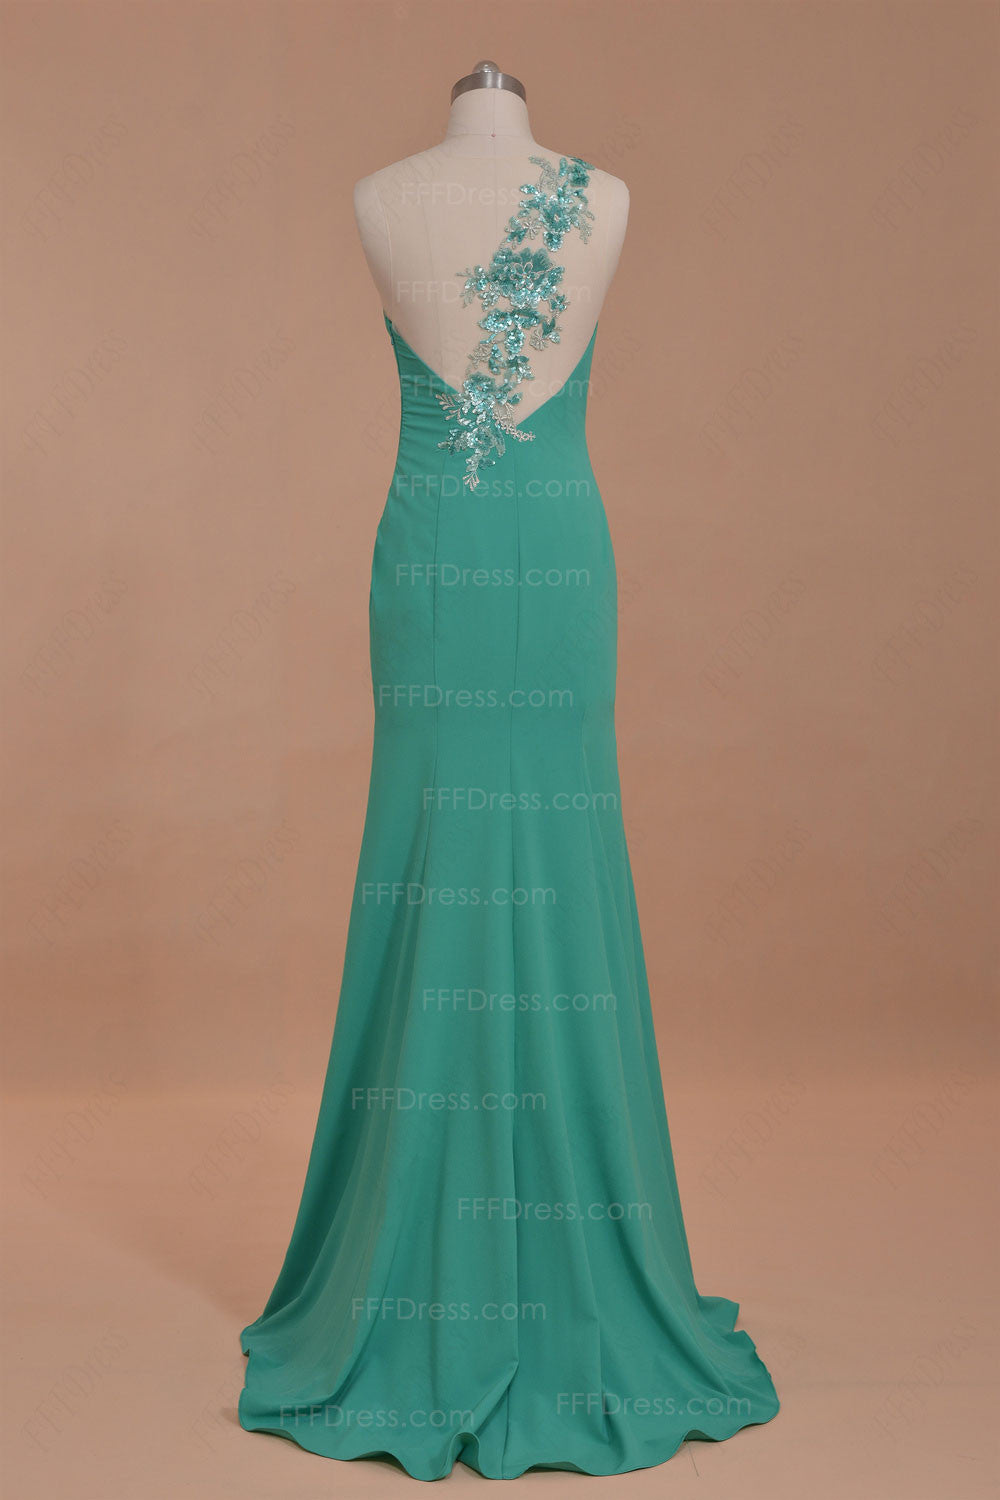 Mermaid beaded green backless prom dresses long